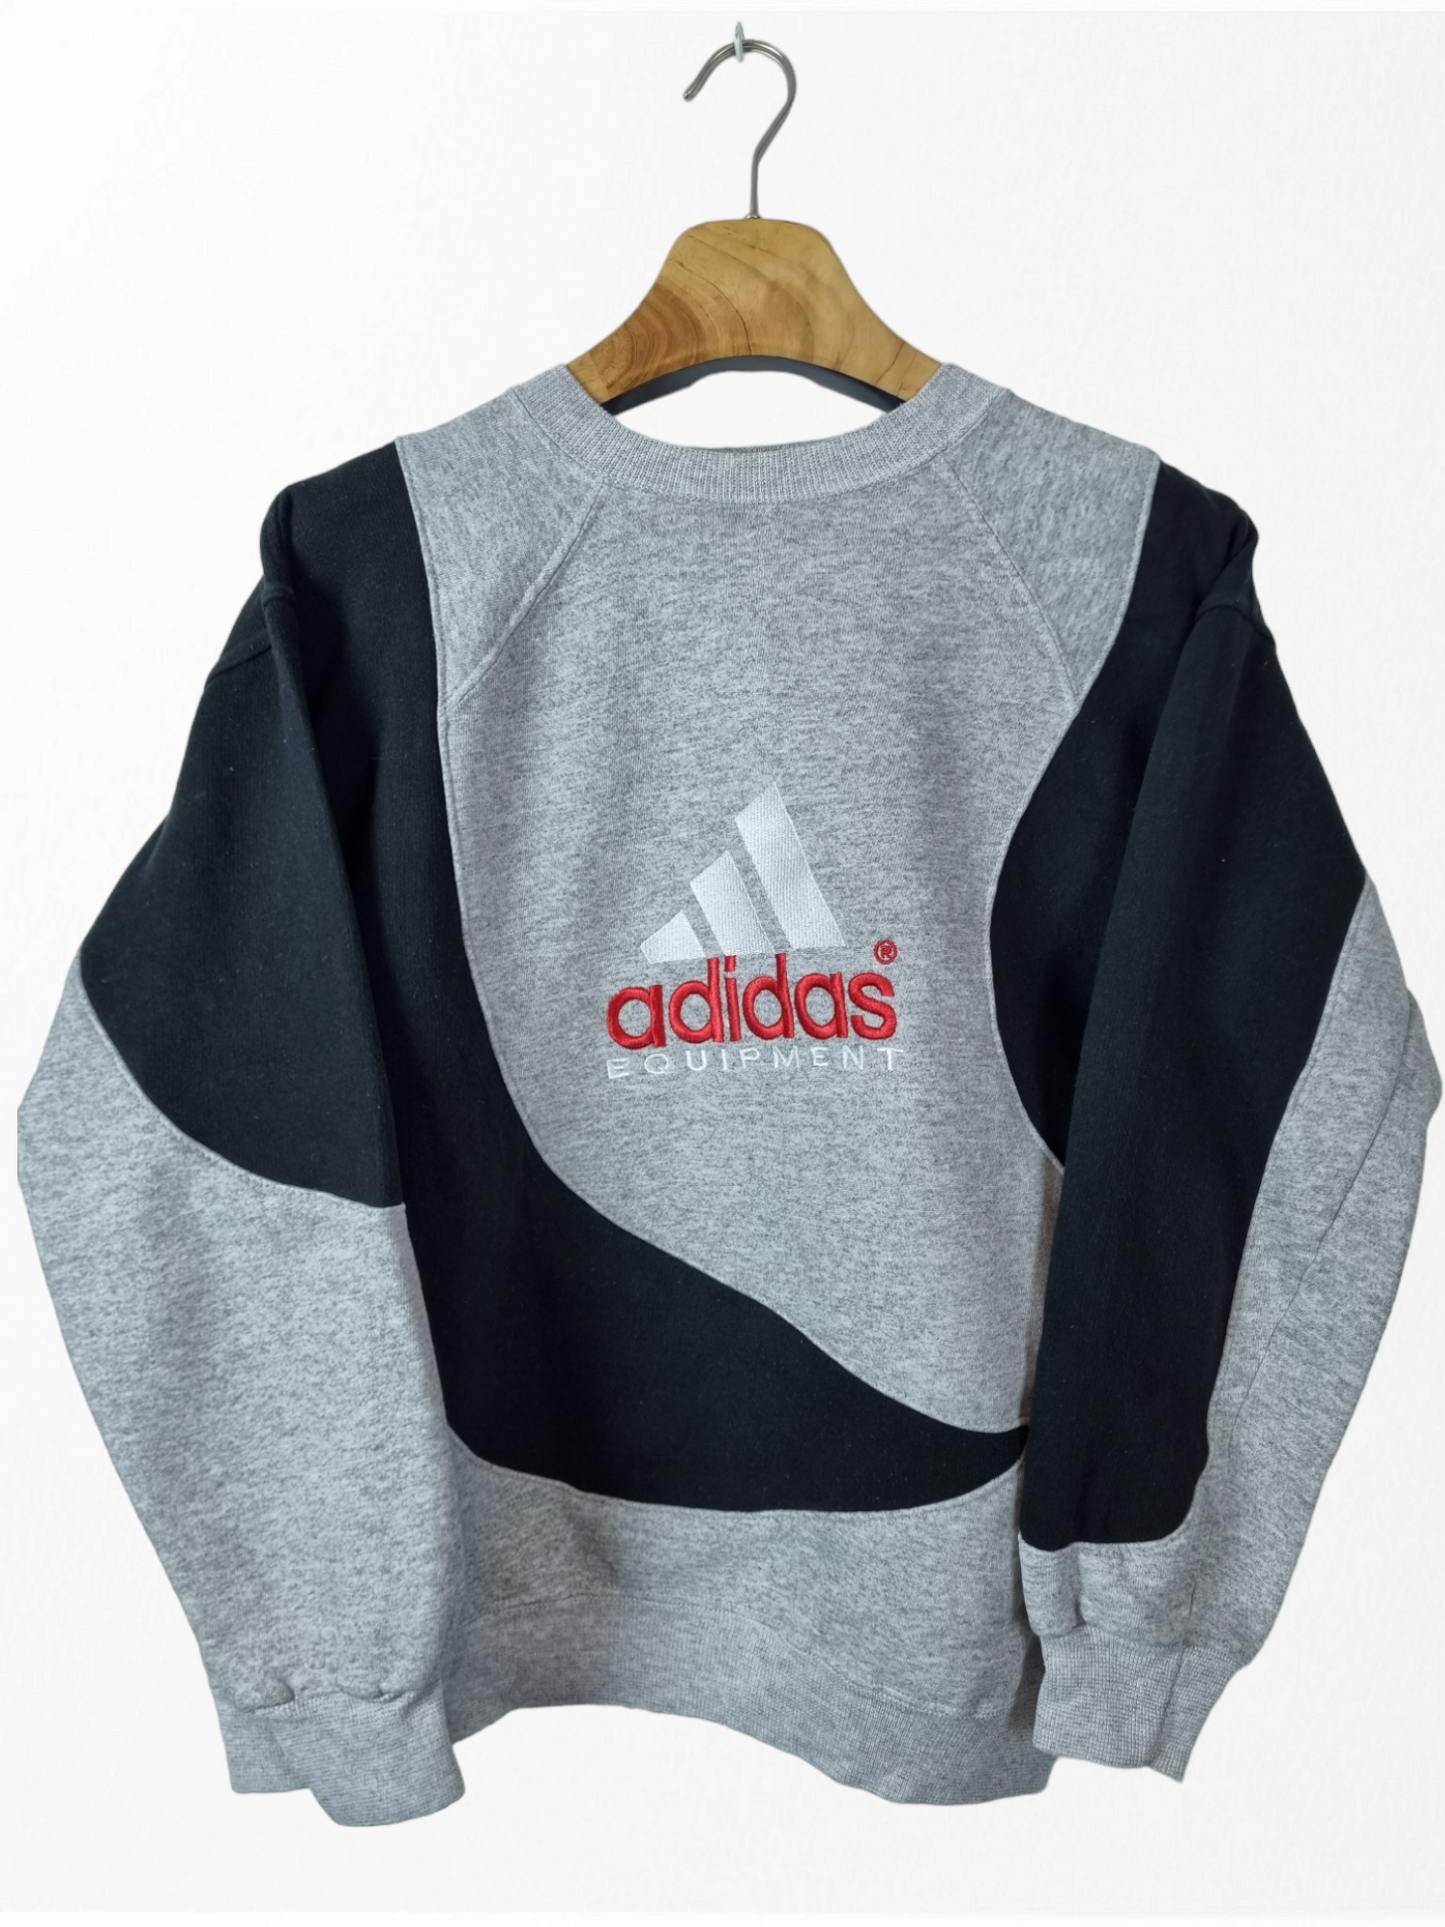 Adidas equipment sweater maat S